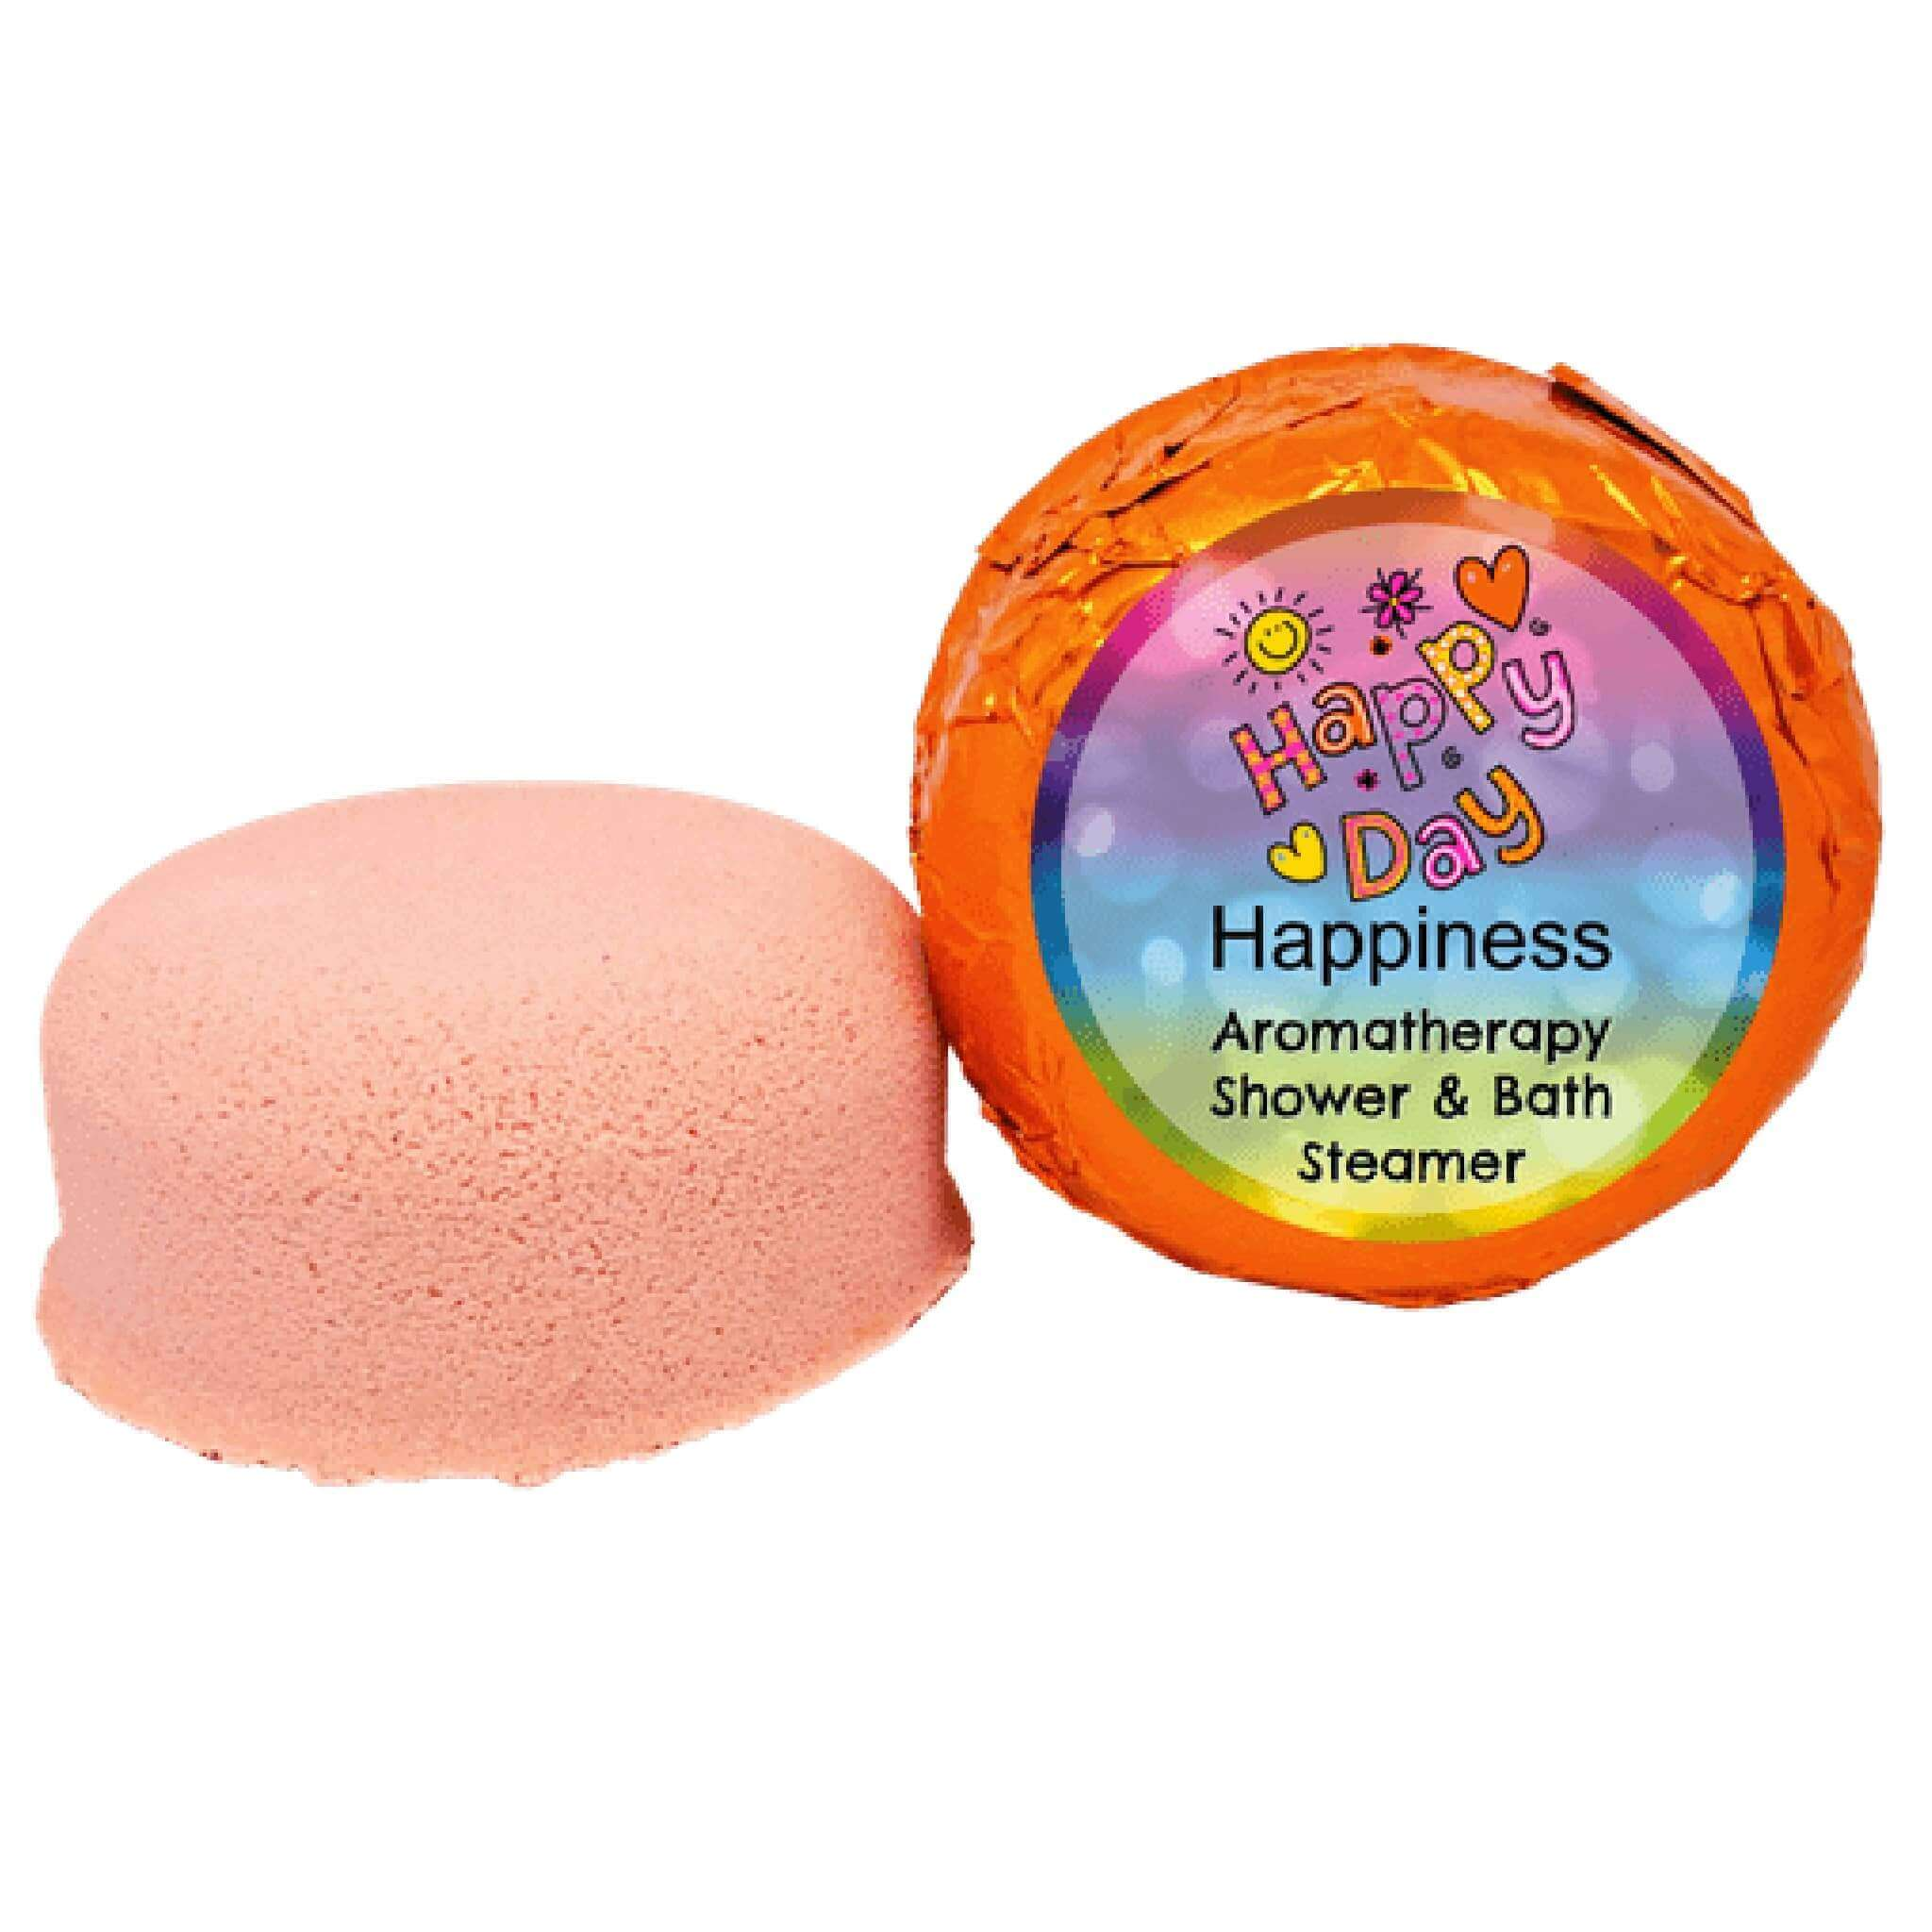 happiness-aromatherapy-shower-bath-steamer-vegan